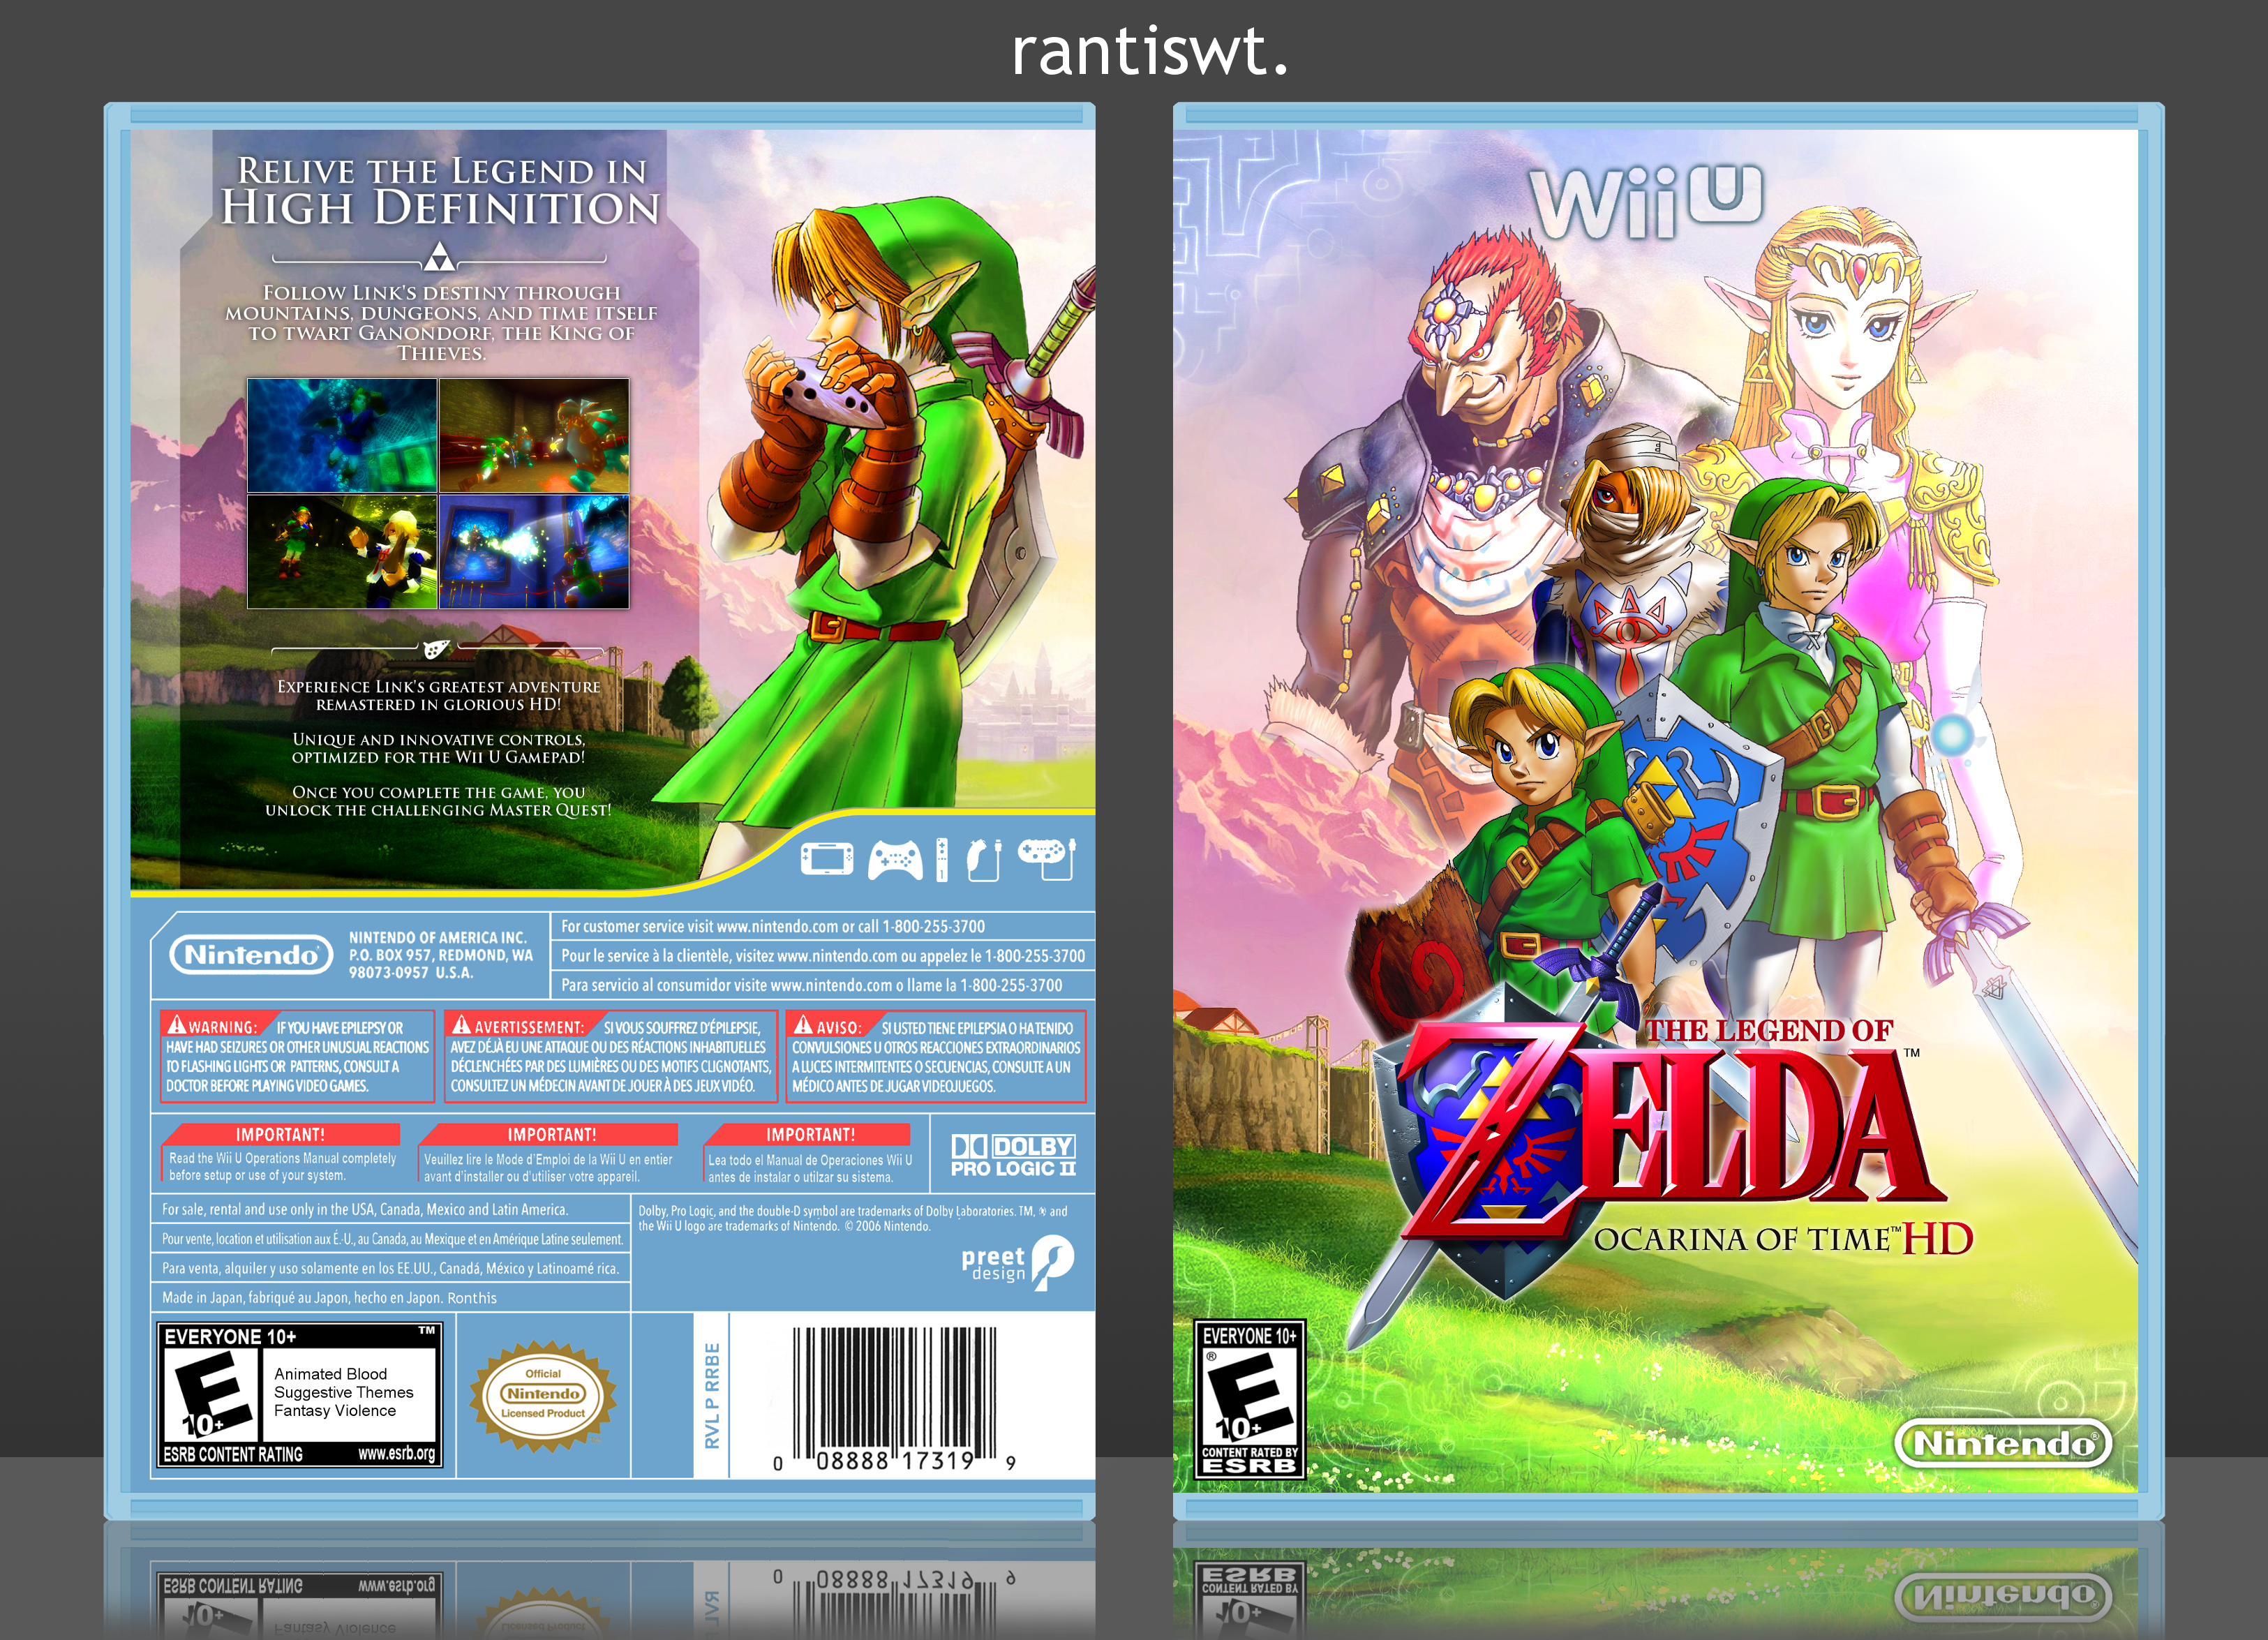 The Legend of Zelda: Ocarina of Time HD box cover